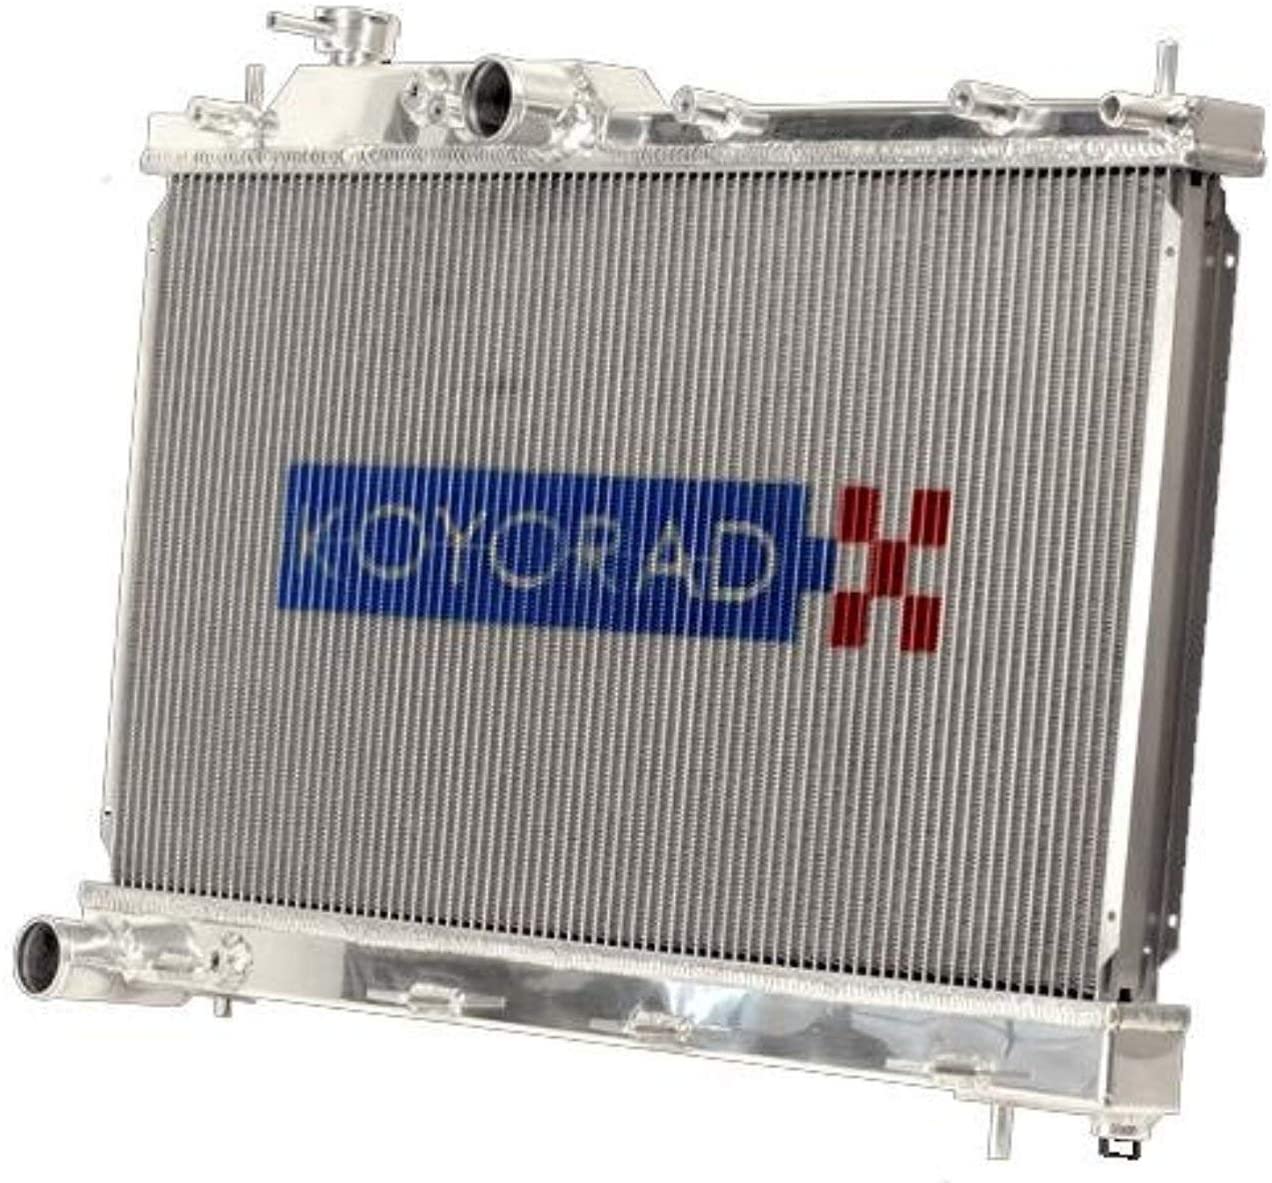 KOYO R-Core Radiator [Toyota Supra (1993-1998)]